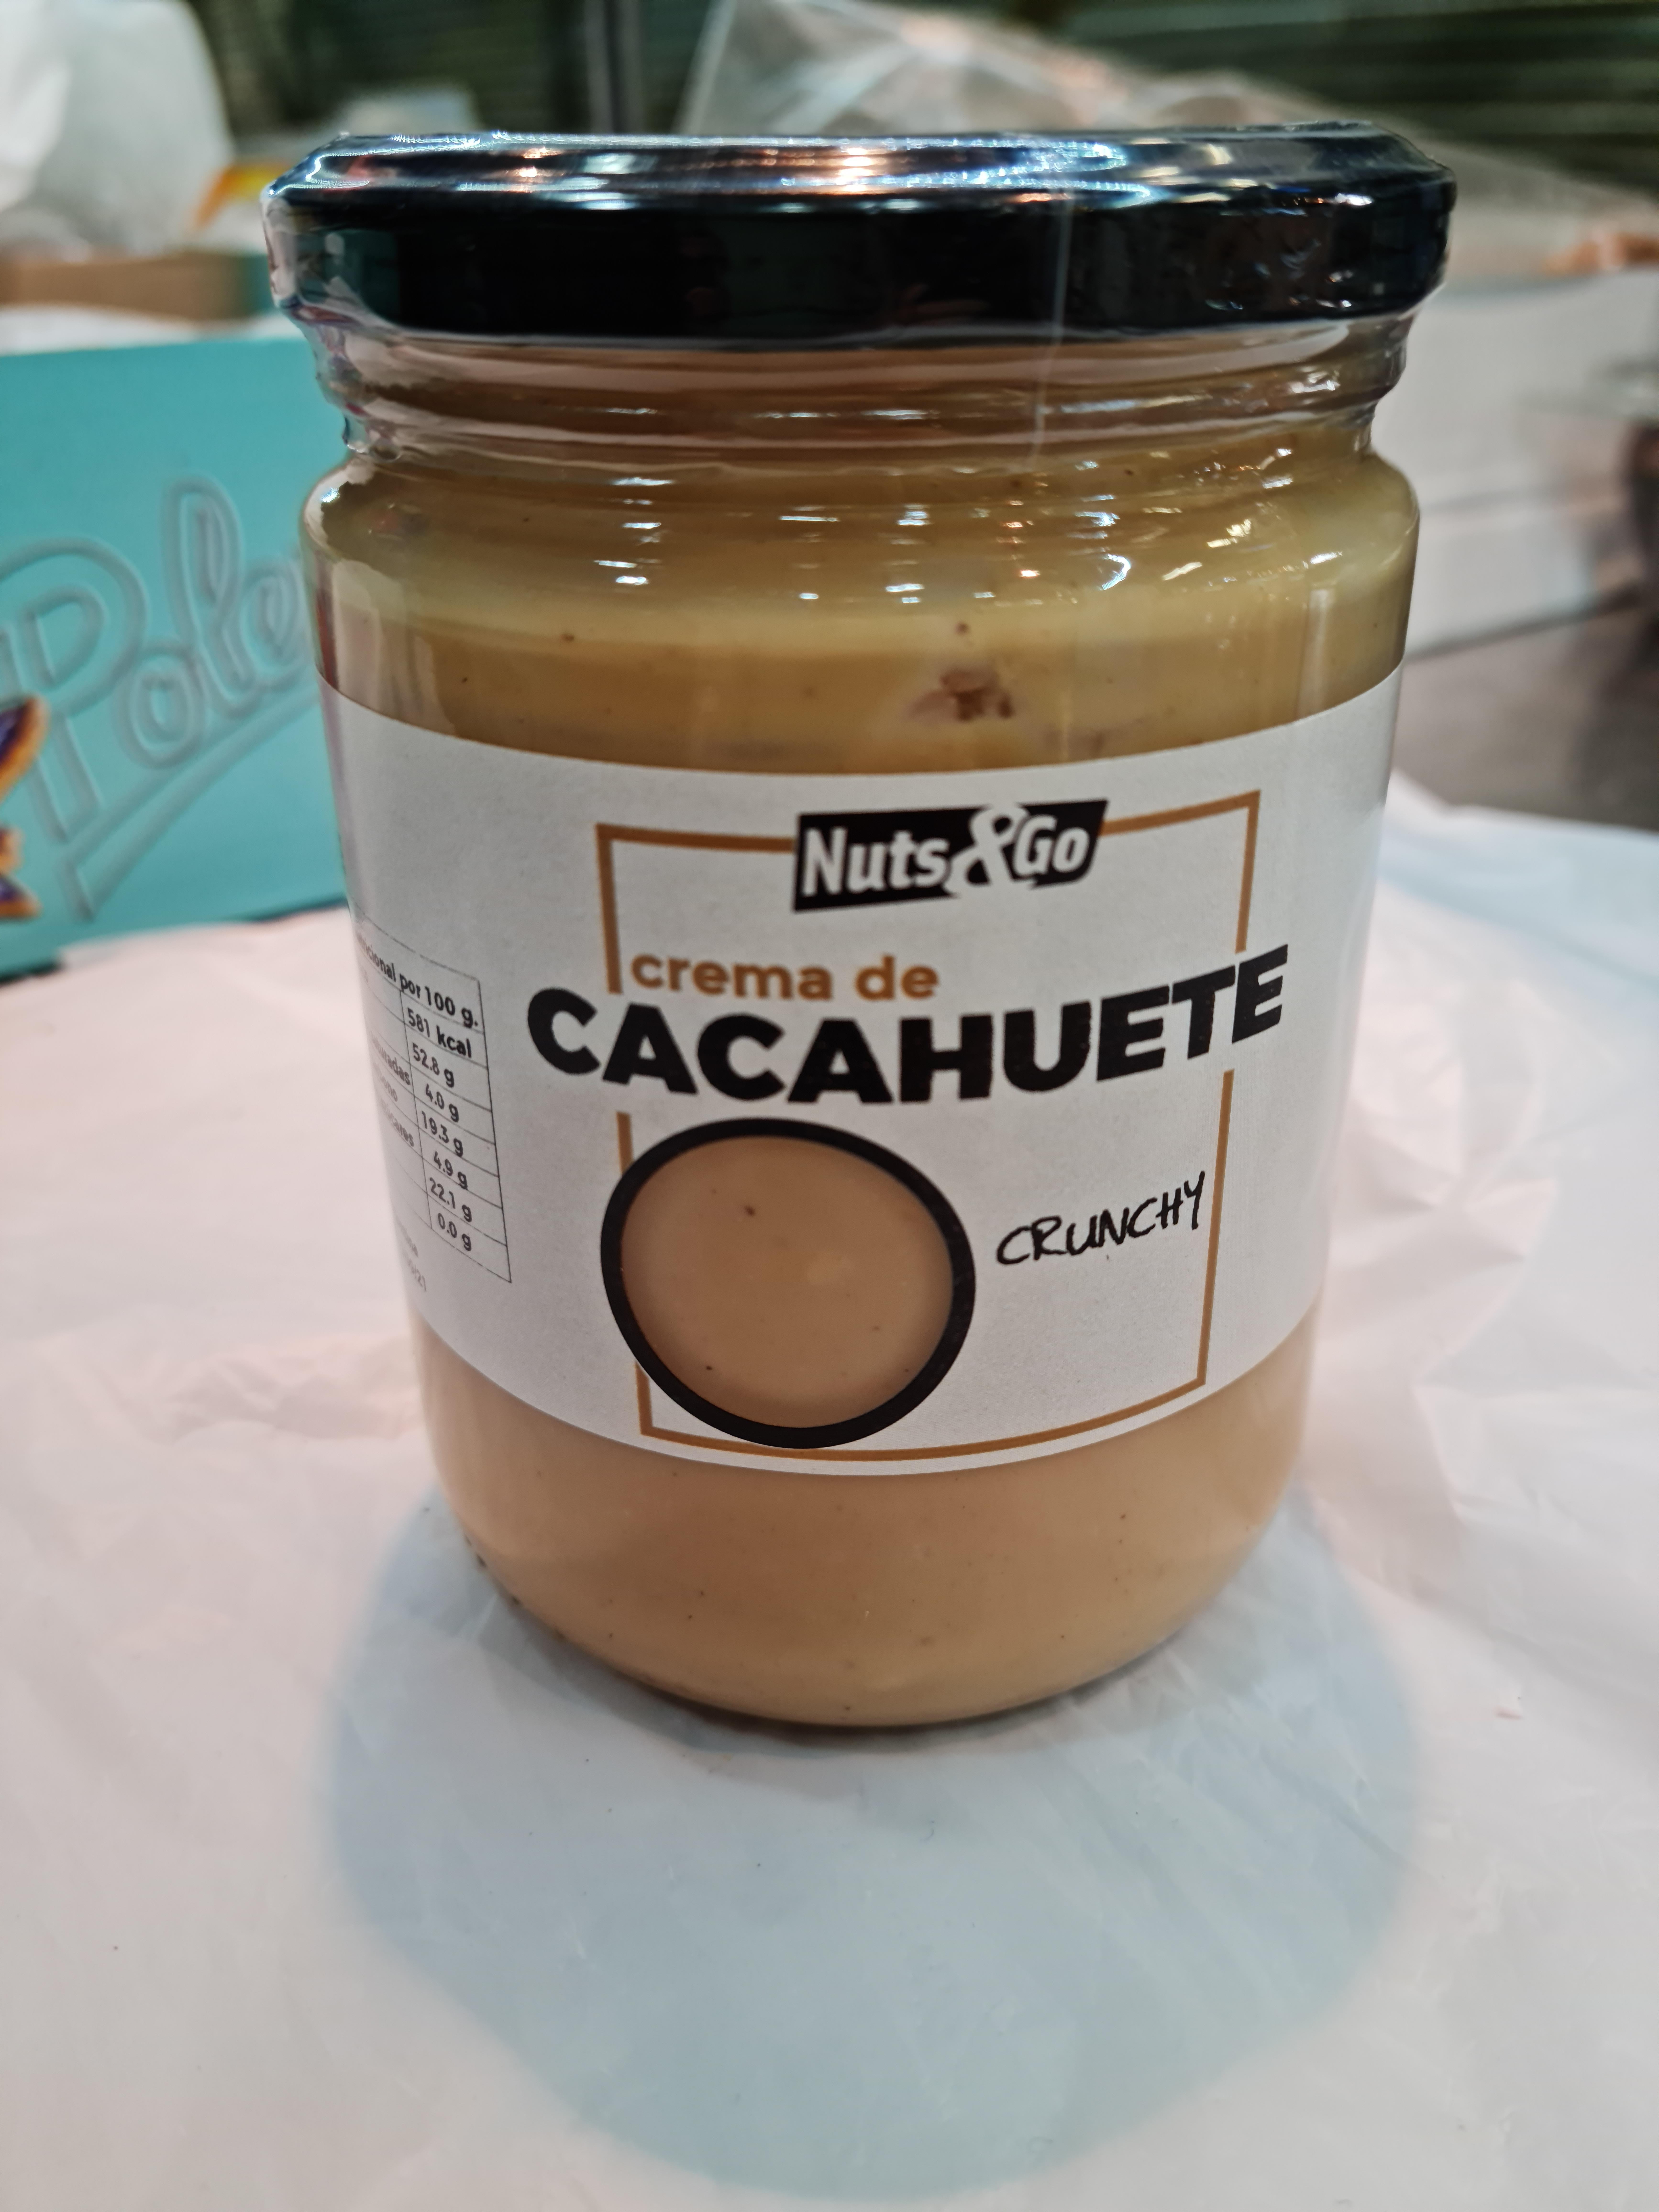 Nuts&go - Crema de cacahuete crunchy